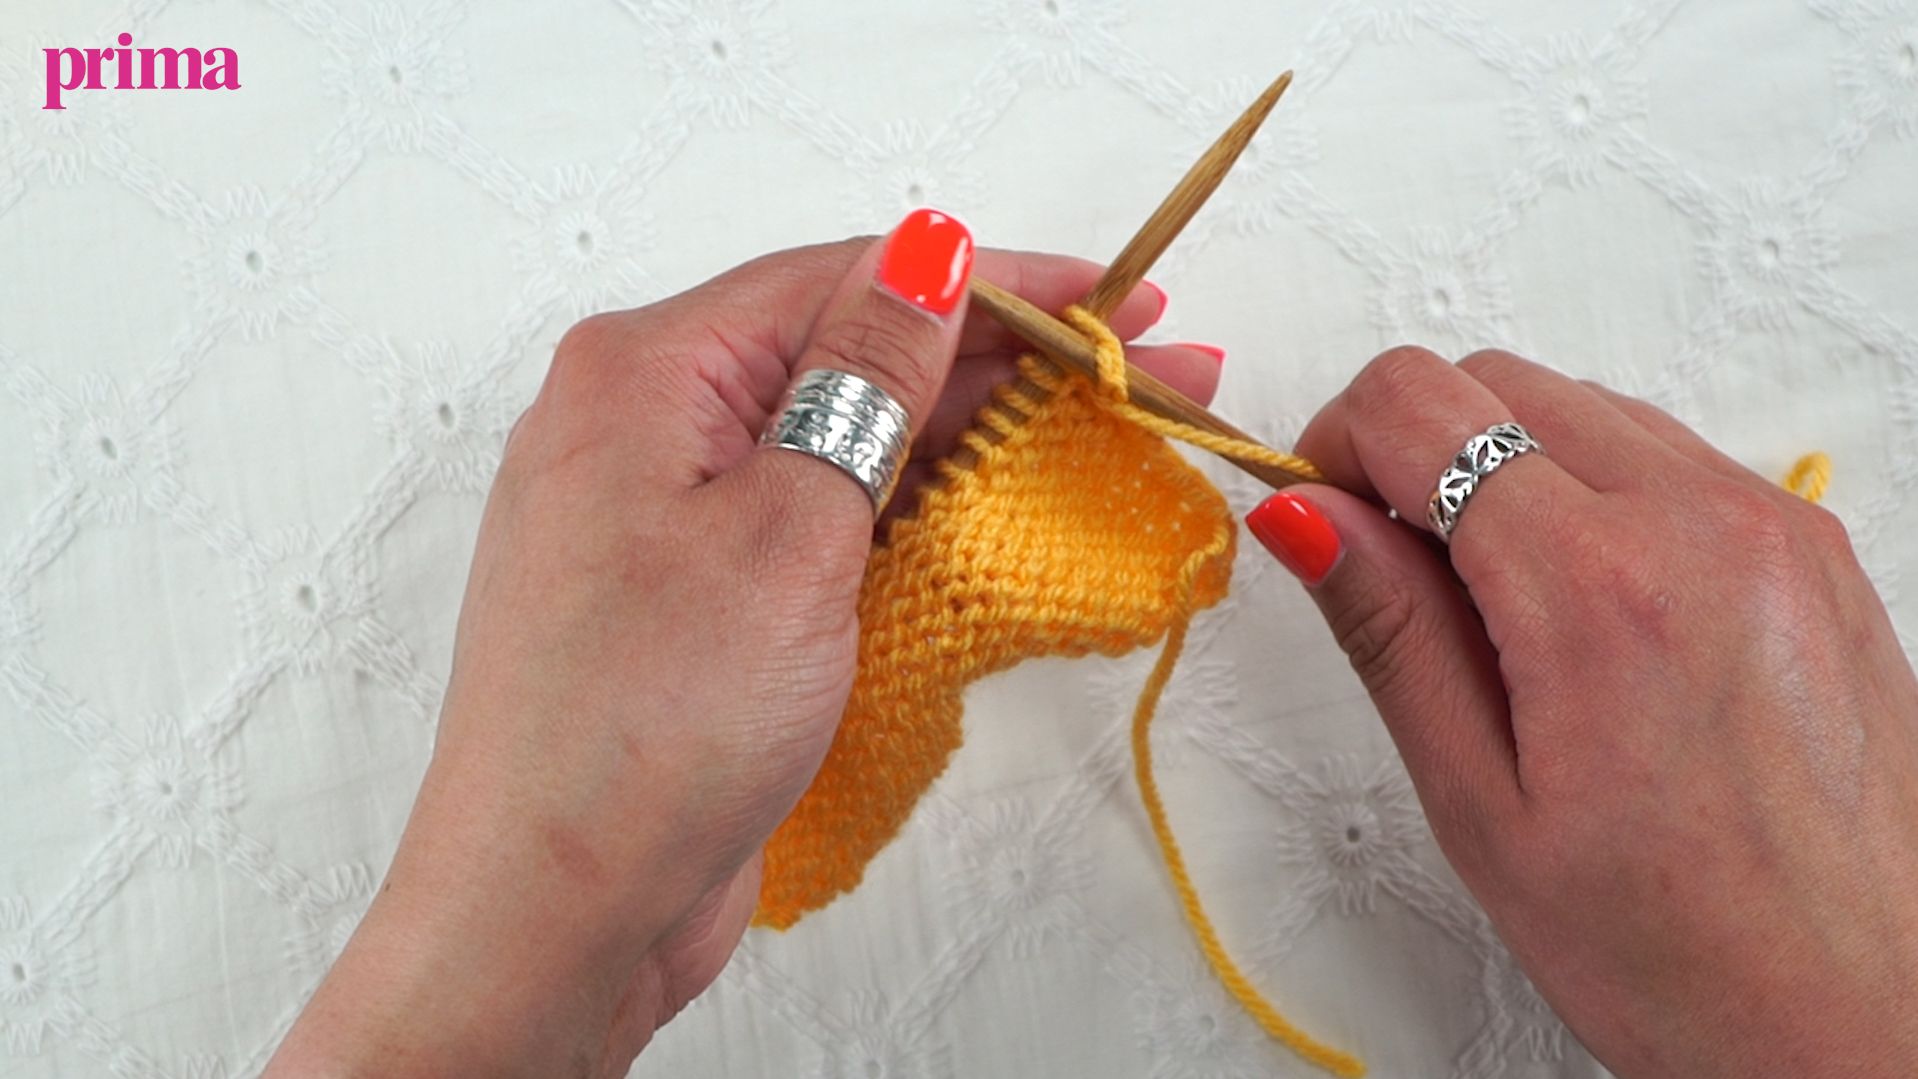 knit stitch purl stitch